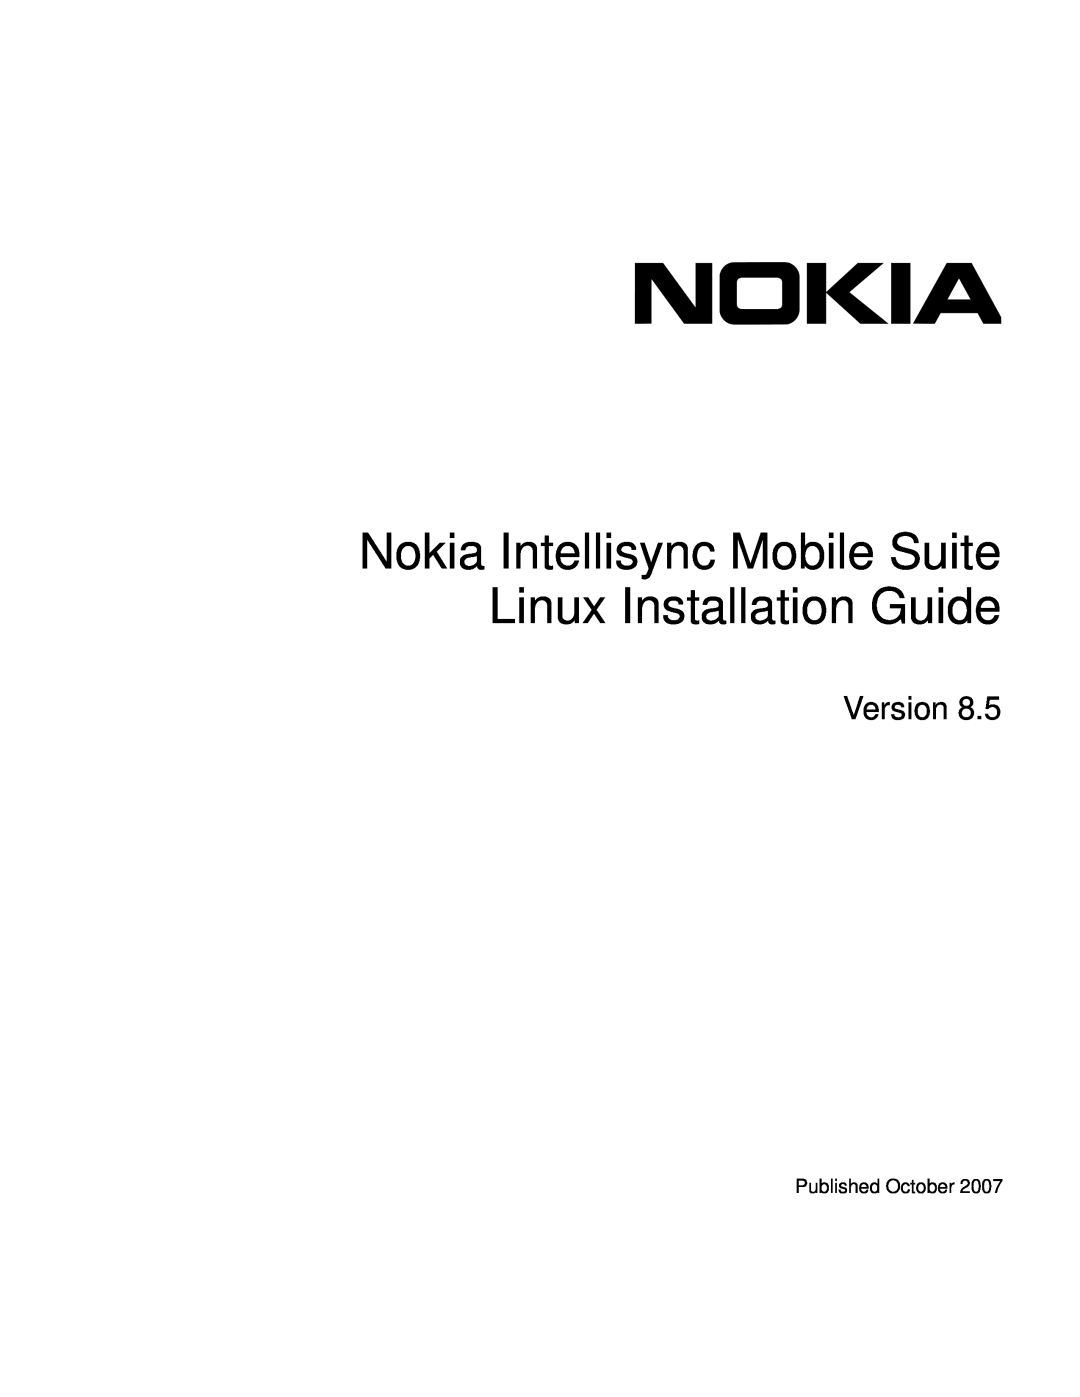 Nokia 8.5 manual Version, Published October 